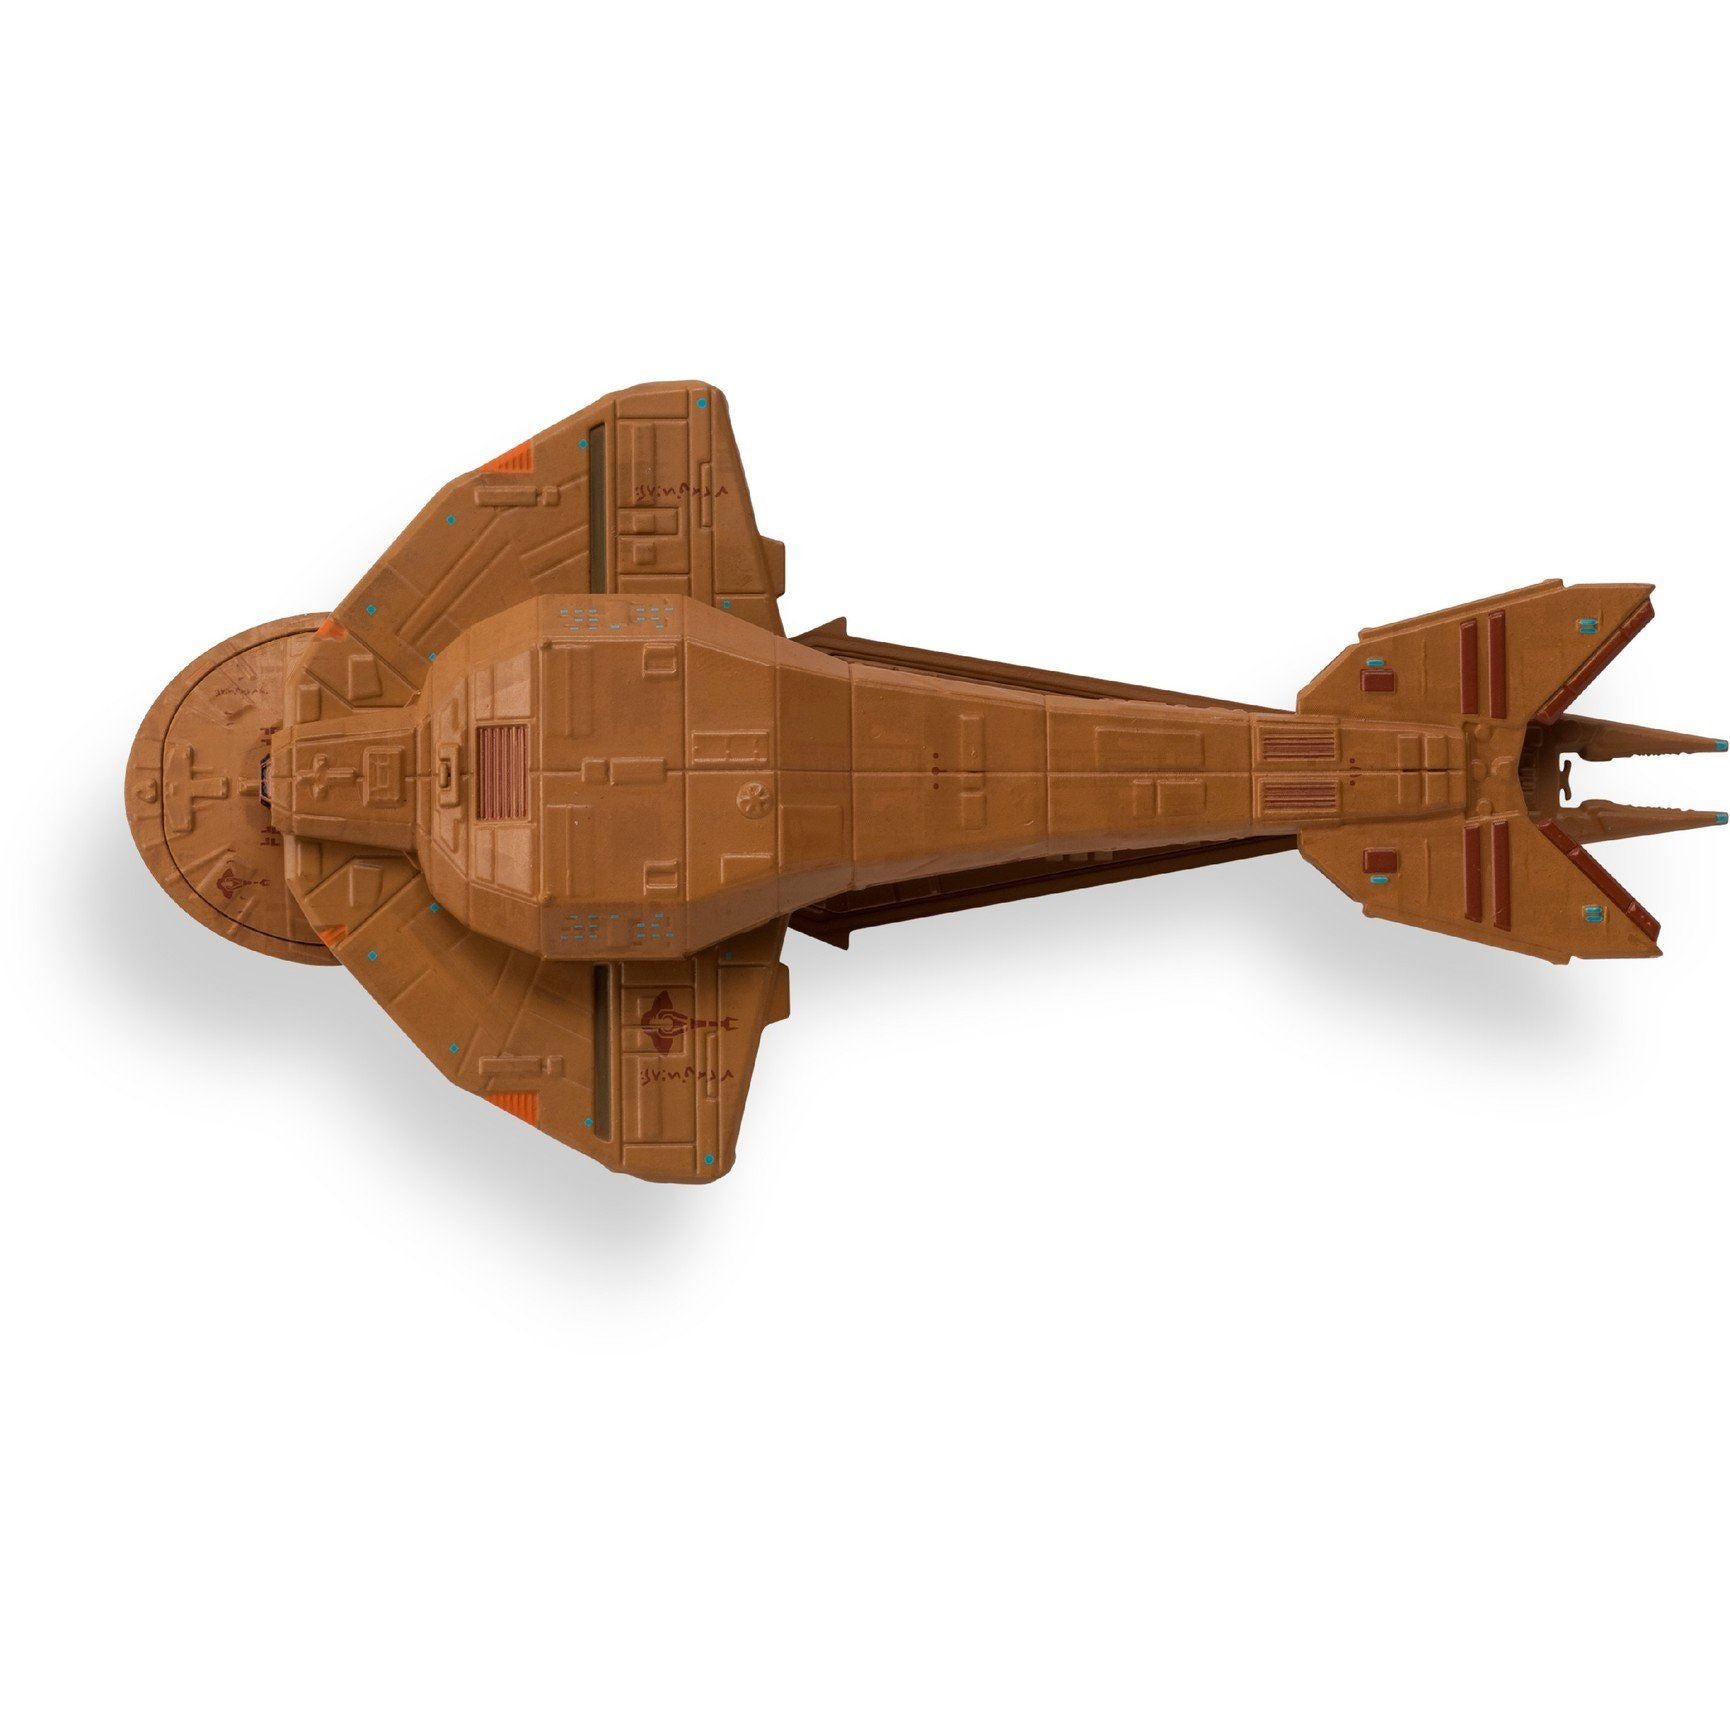 #136 Cardassian Keldon Class Cruiser Model Die Cast Ship (Eaglemoss / Star Trek)